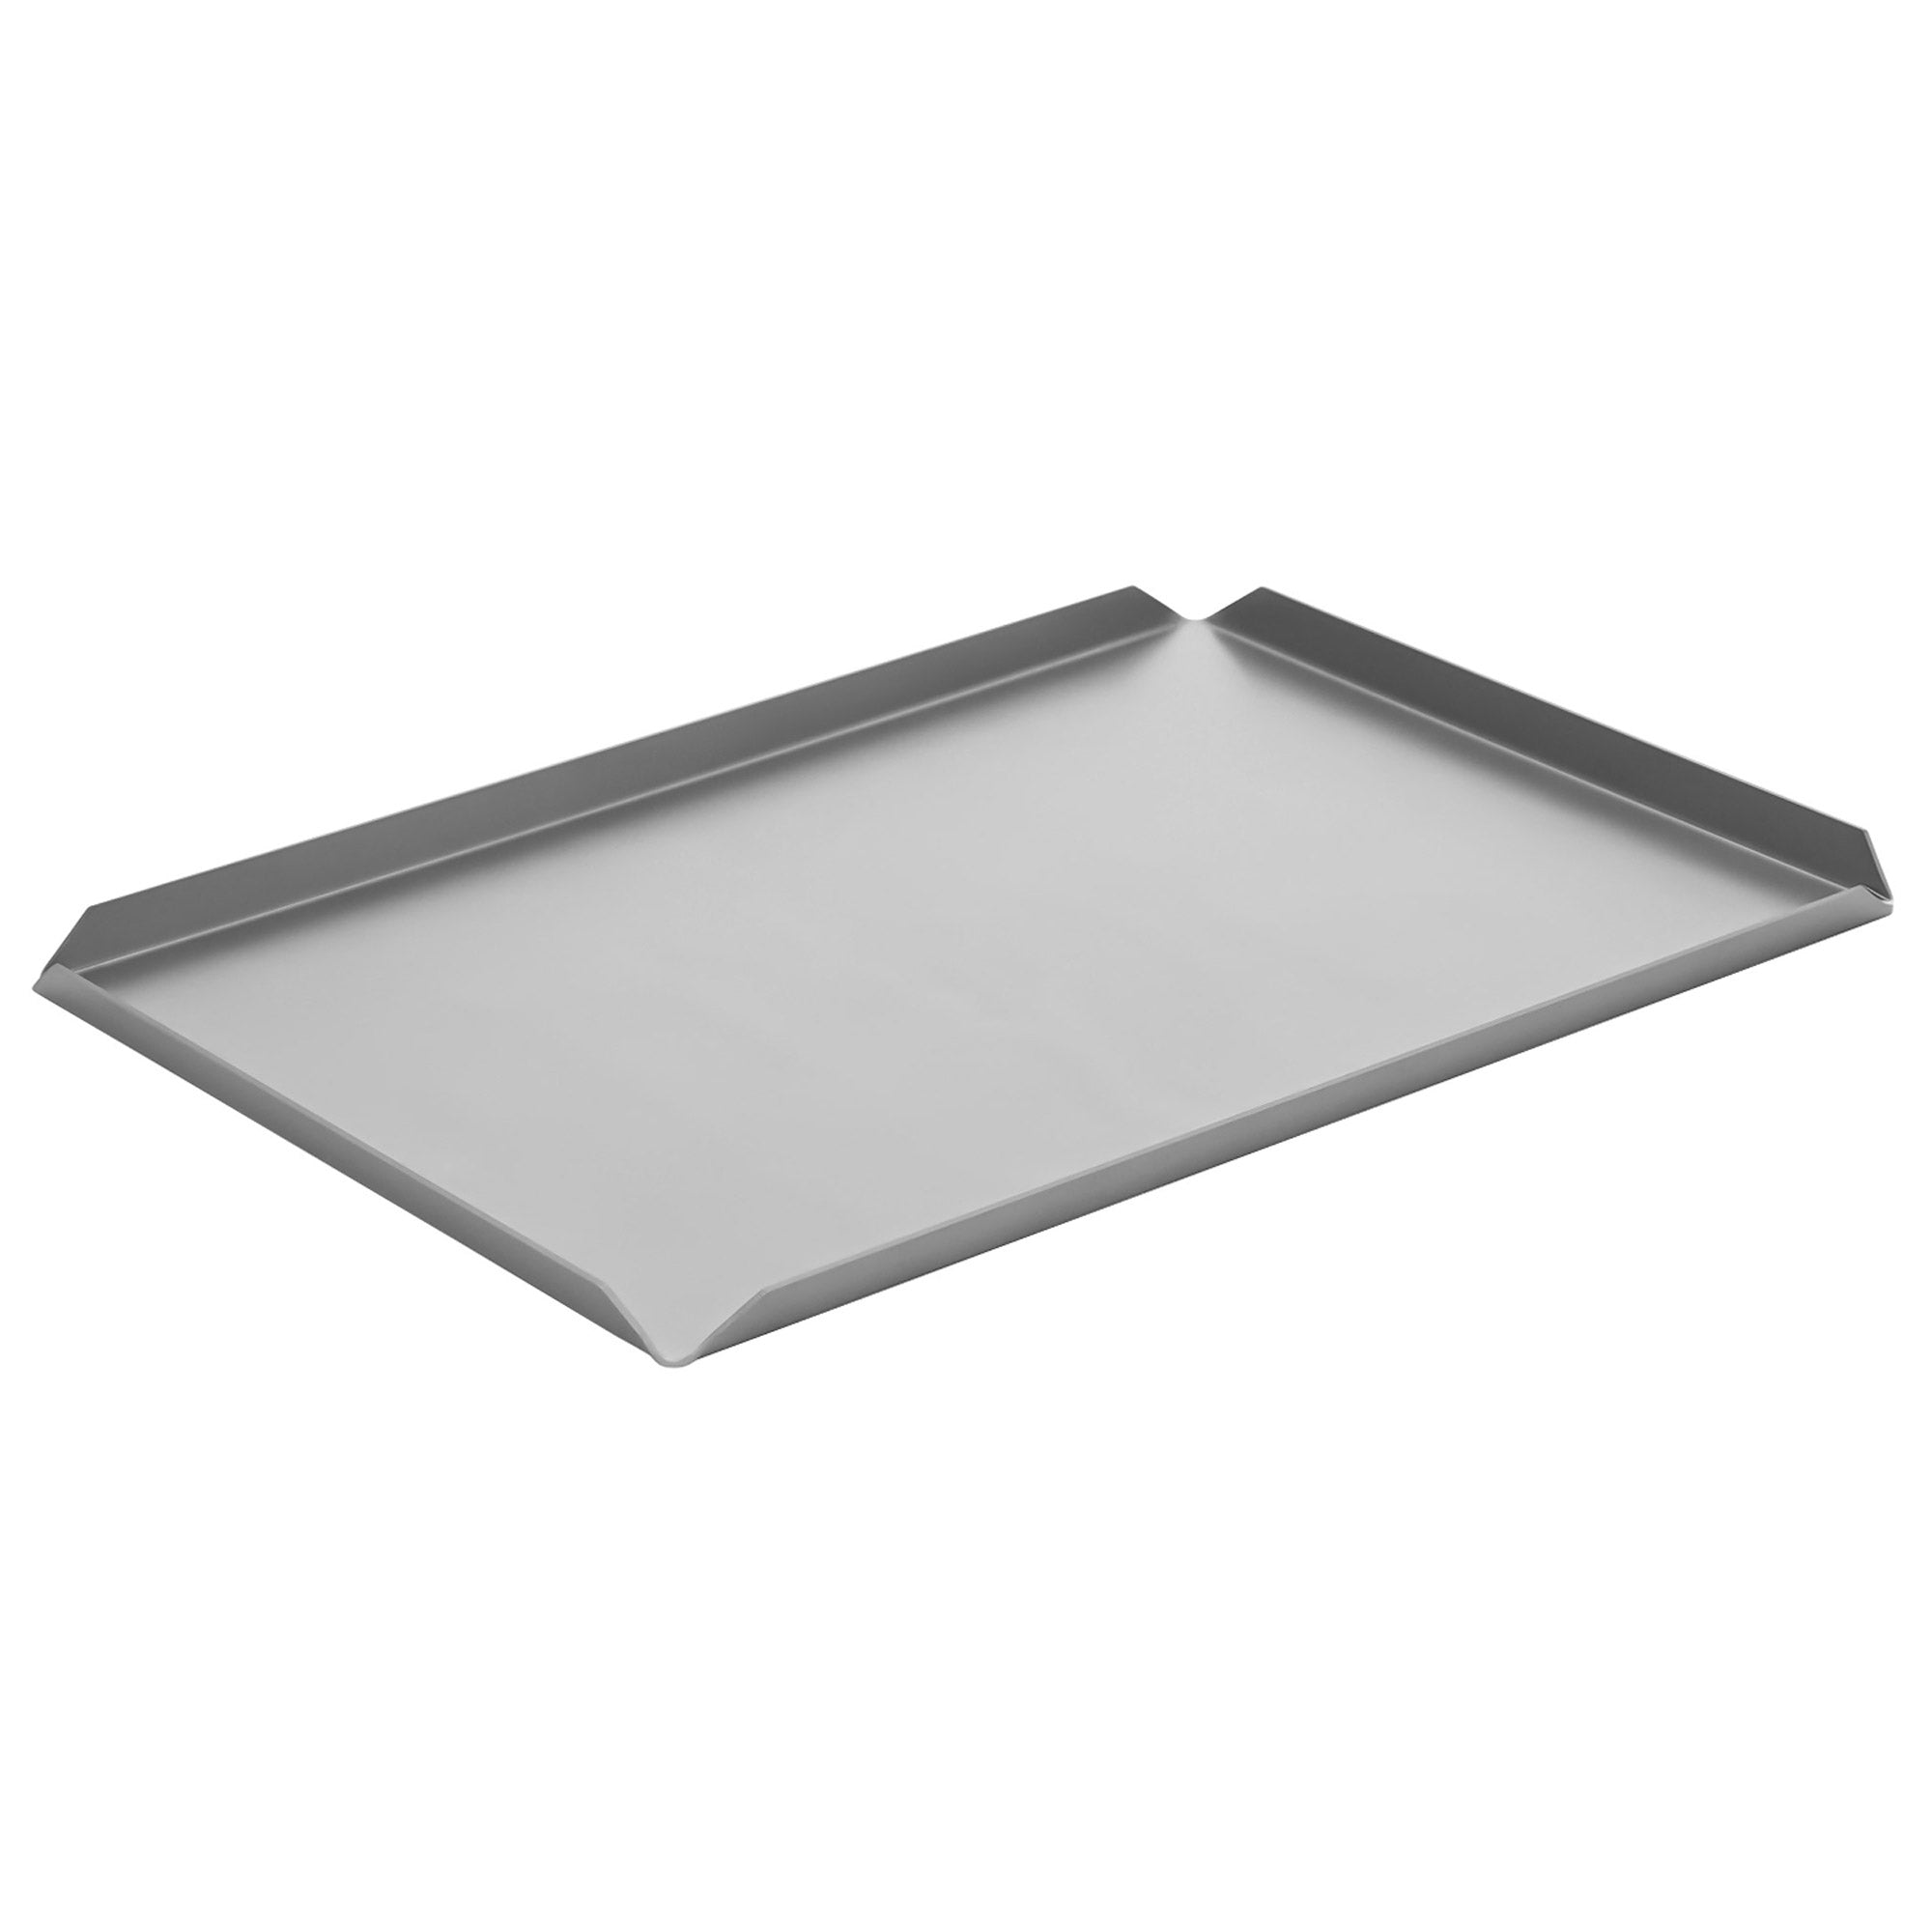 (5 stk.) Konfekt og presentasjonsplate i aluminium - 400 x 150 x 10 mm - aluminium